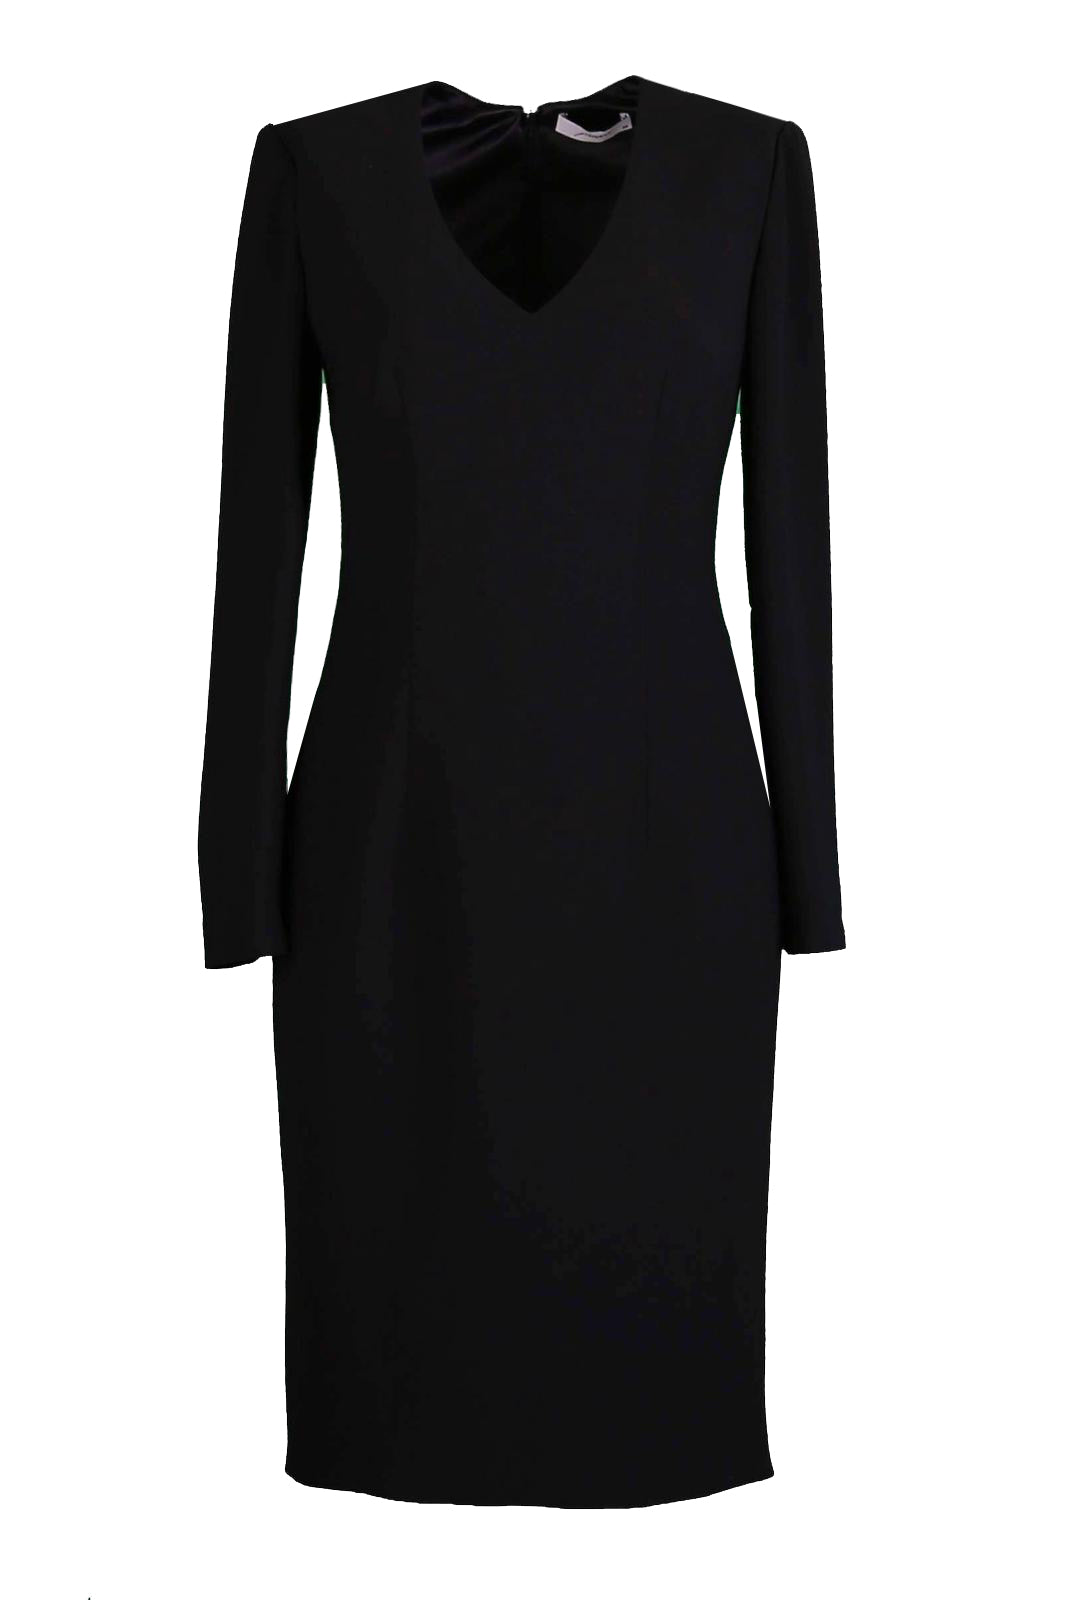 Belle Siyah V Yaka Uzun Kollu Krep Kalem Elbise